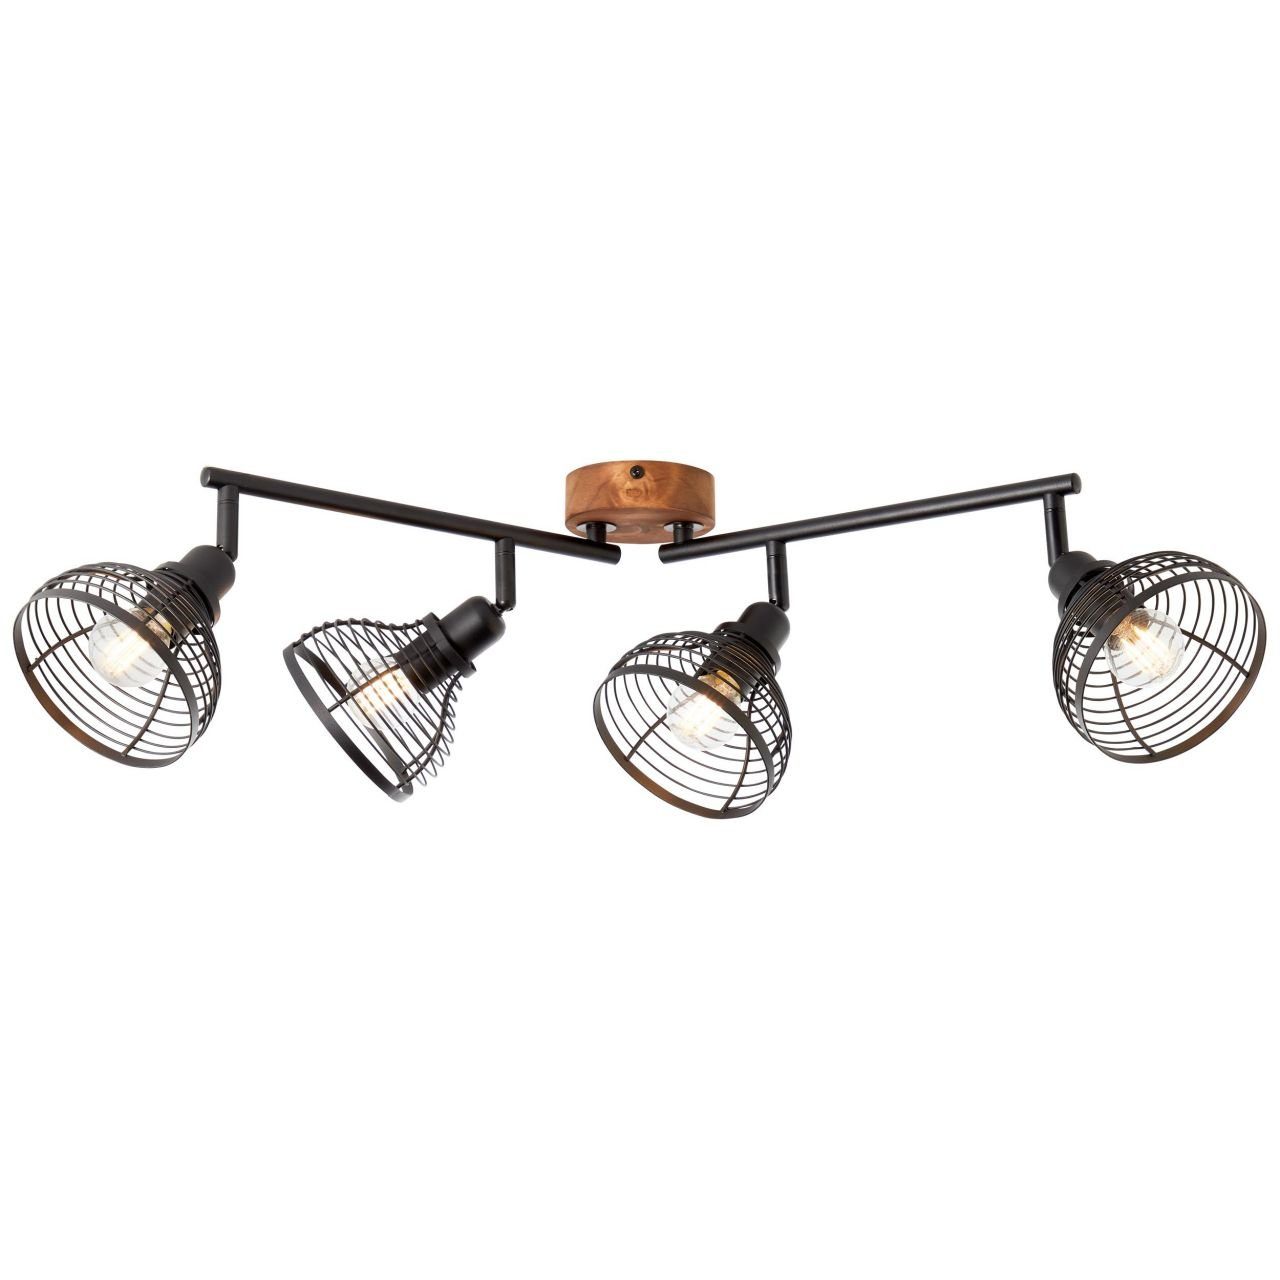 4x D45, Spotrohr Lampe, Avia Metall/Holz, 4flg schwarz/holzfarbend, E1 Deckenleuchte Avia, Brilliant